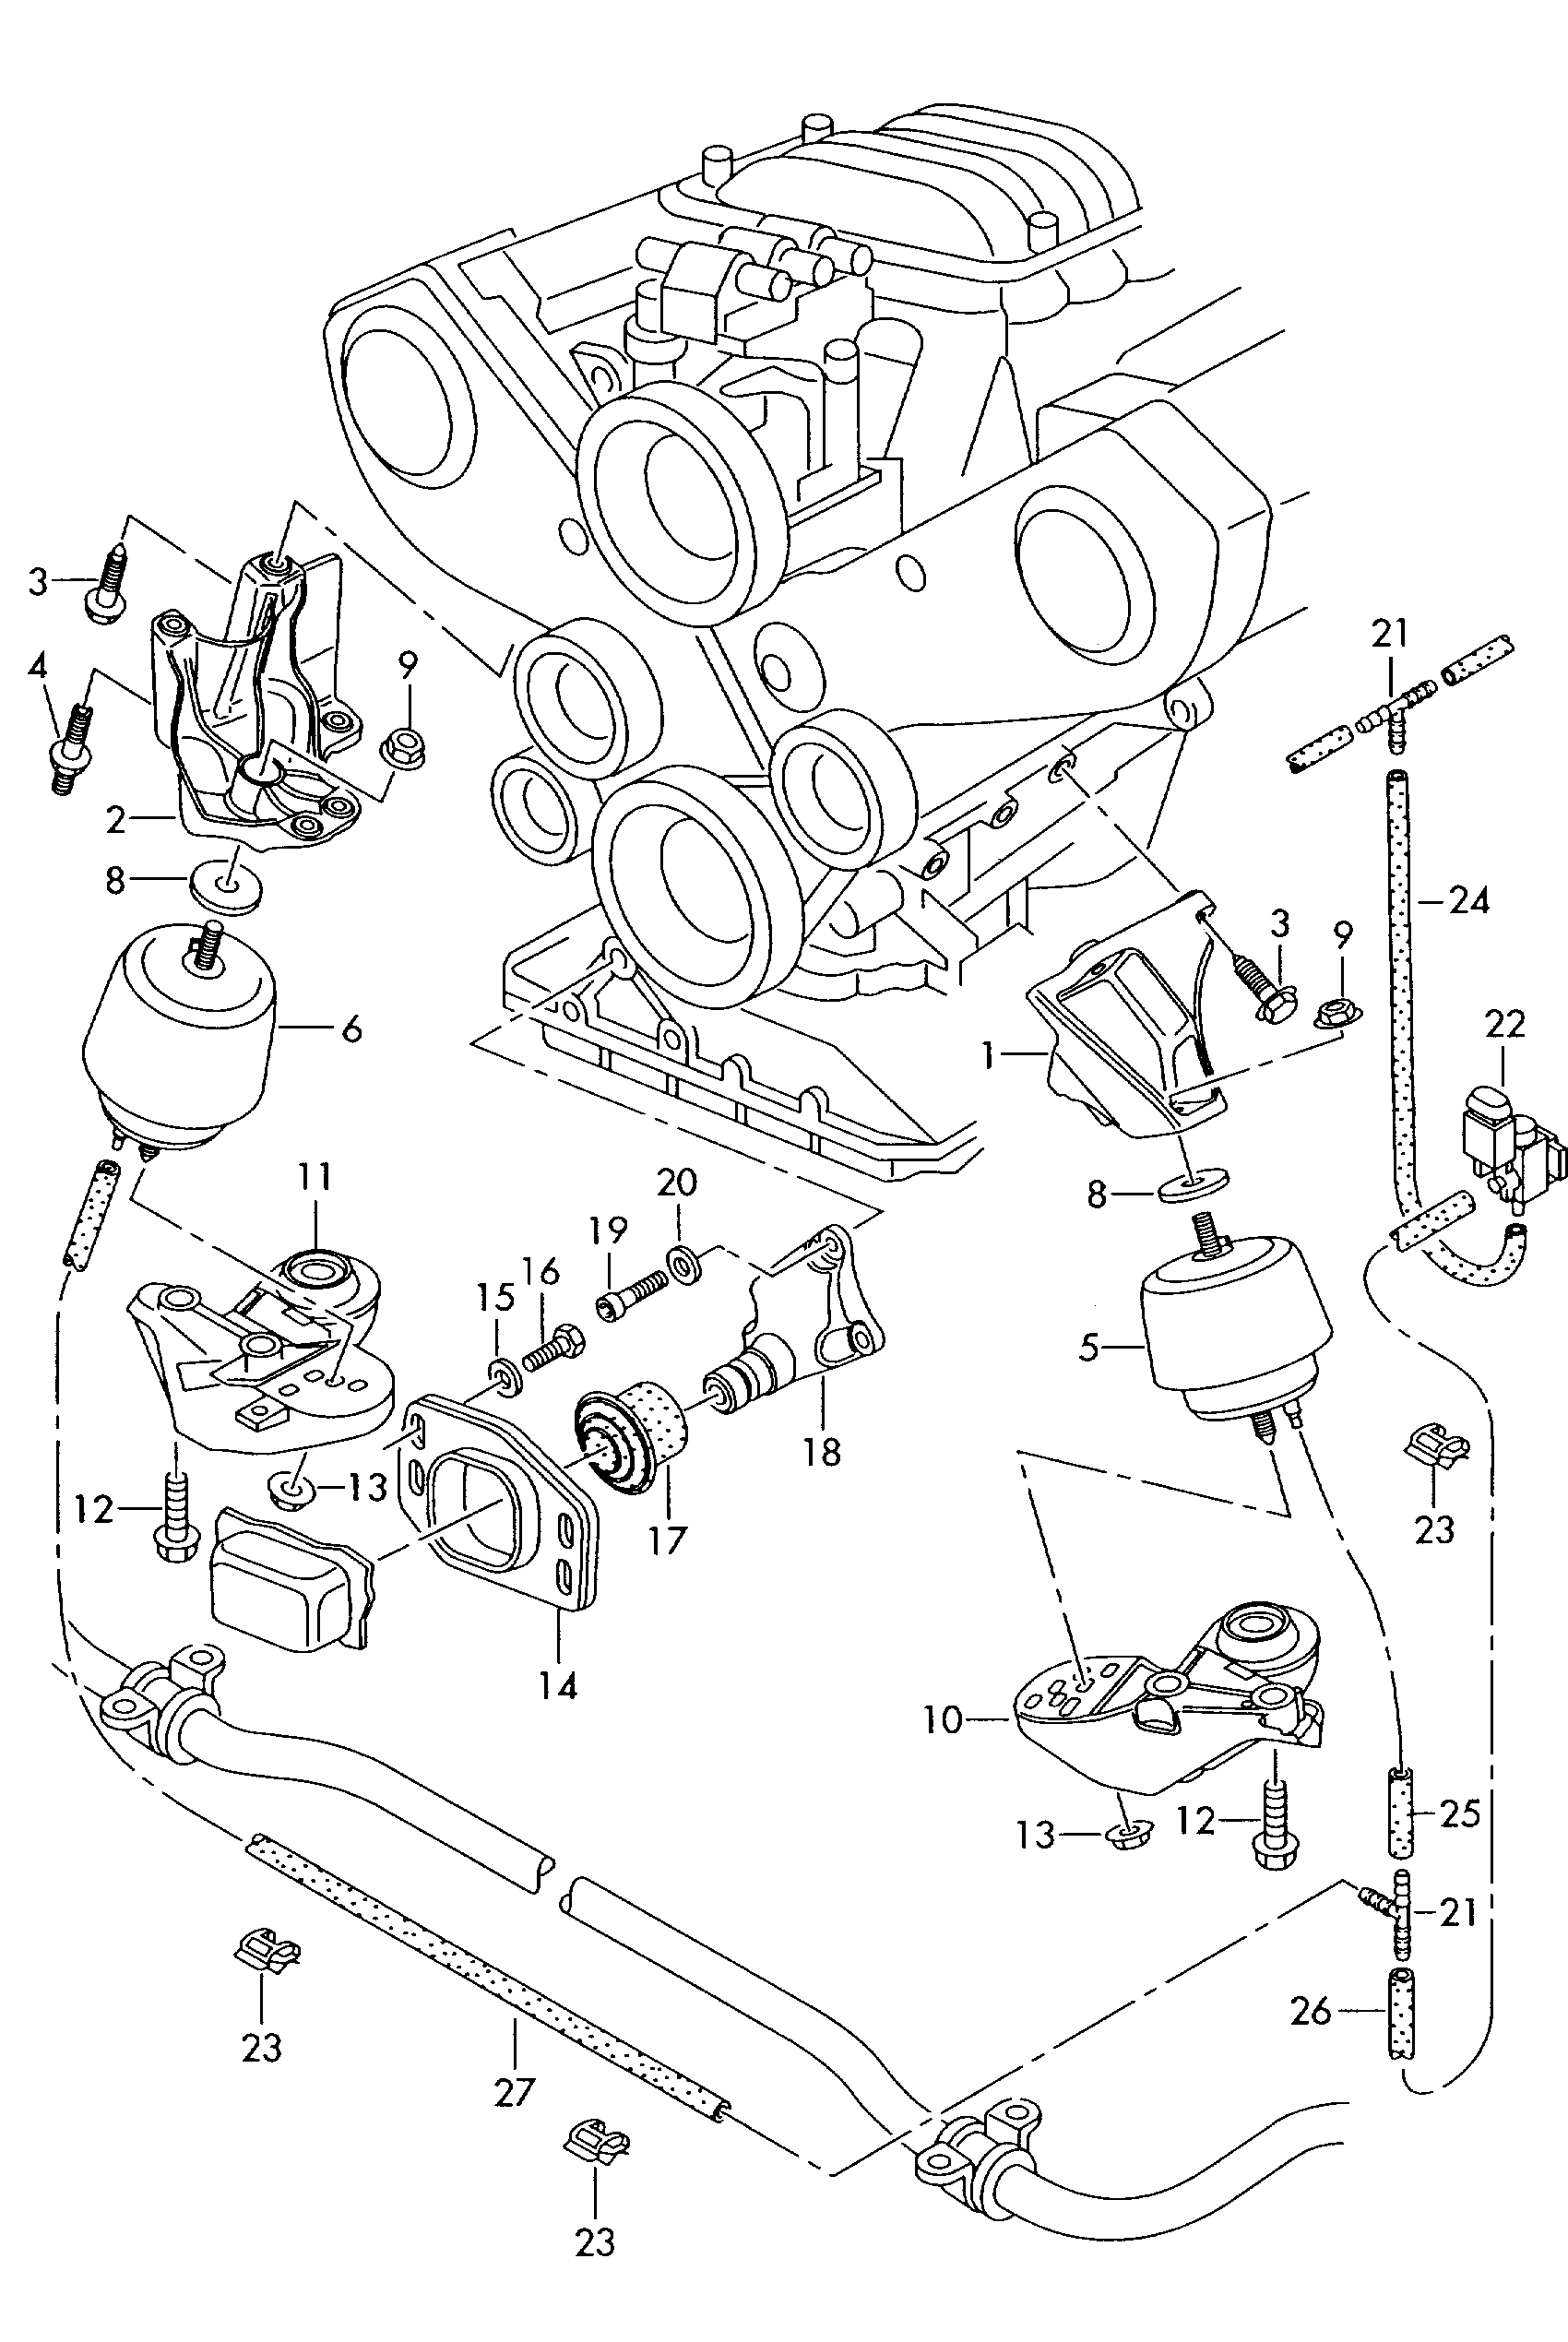 elementy mocujace silnik<br>i skrzynie biegow 4.0 ltr - Passat/Variant/Santana - pa